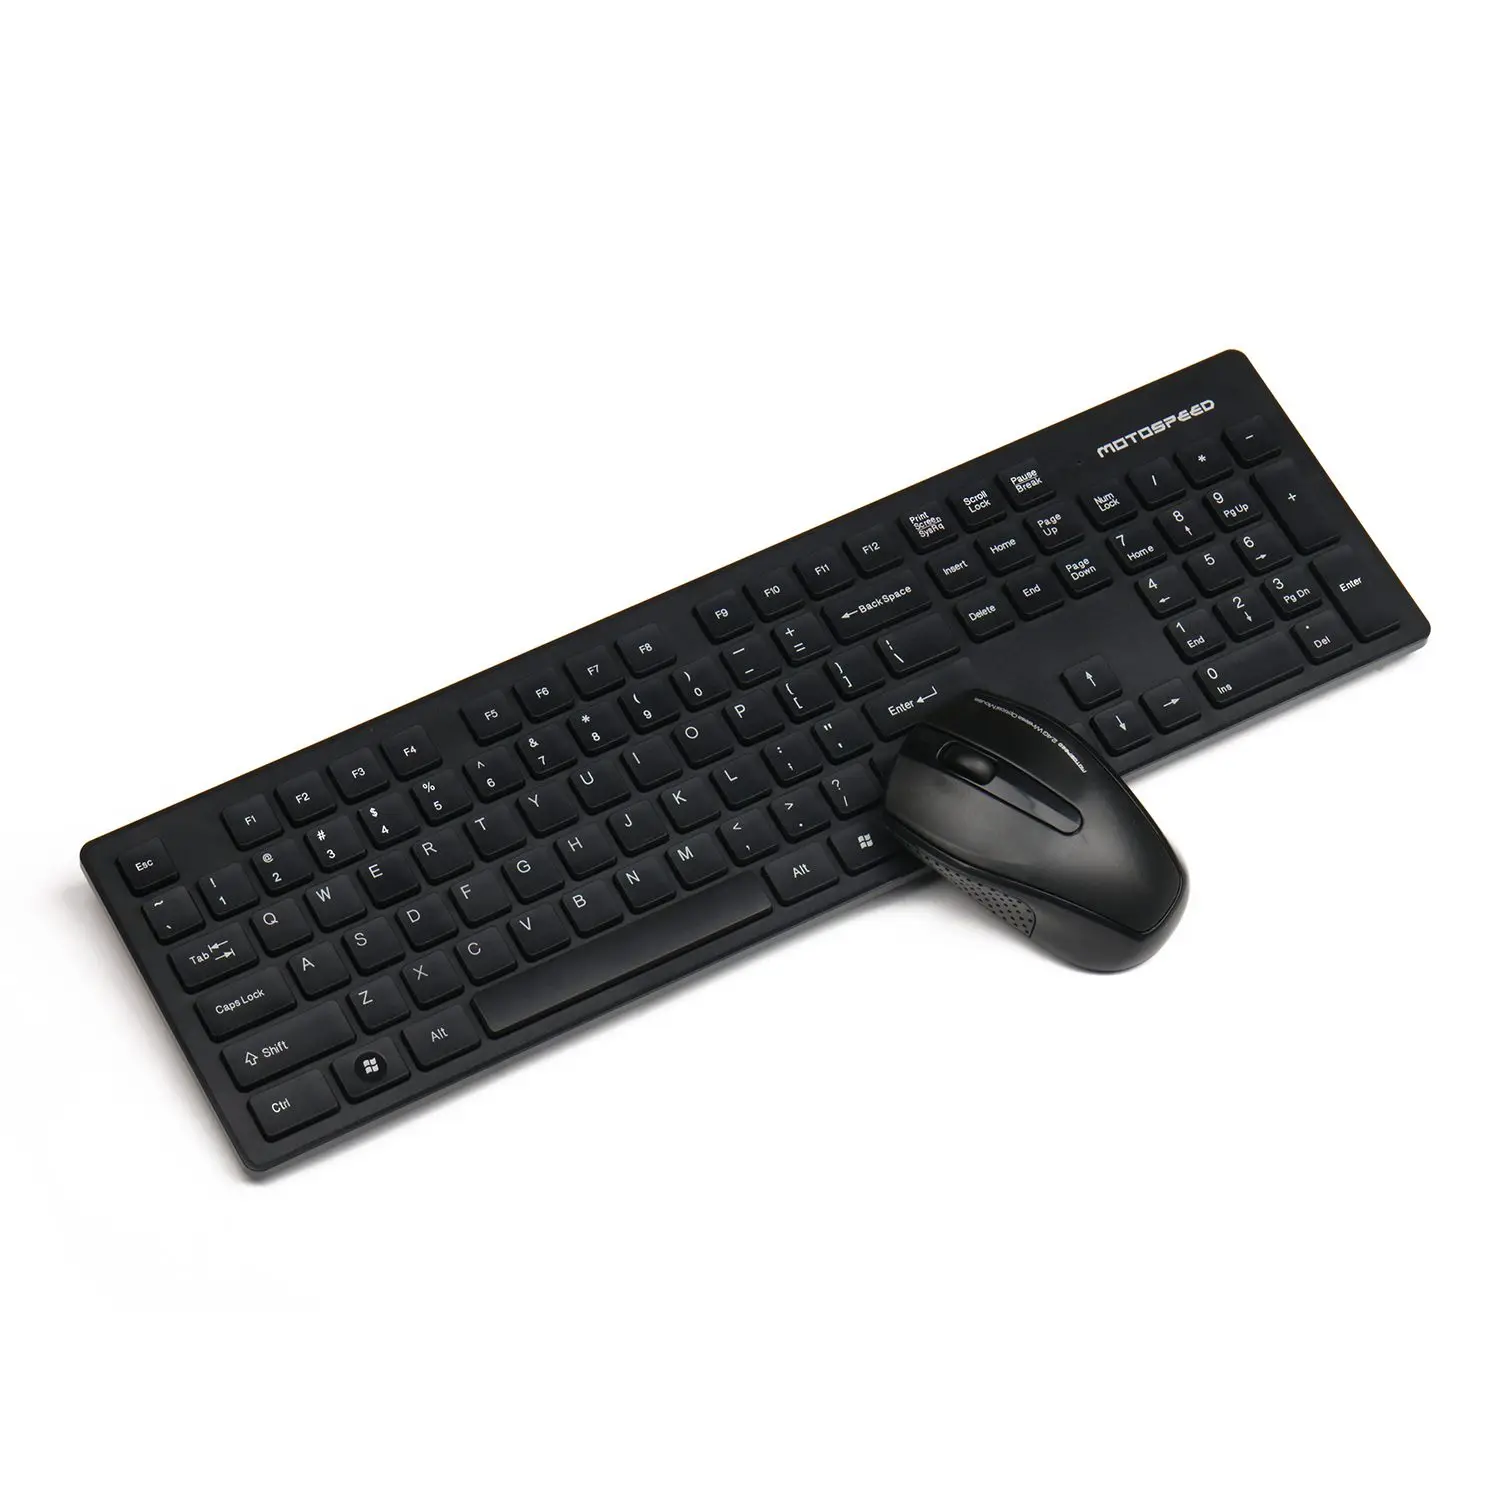 

MOTOSPEED G4000 2.4G Wireless Keyboard And Mouse Combo USB 2.0 1000DPI Mouse Ergonomics 104 Keys 10 meters